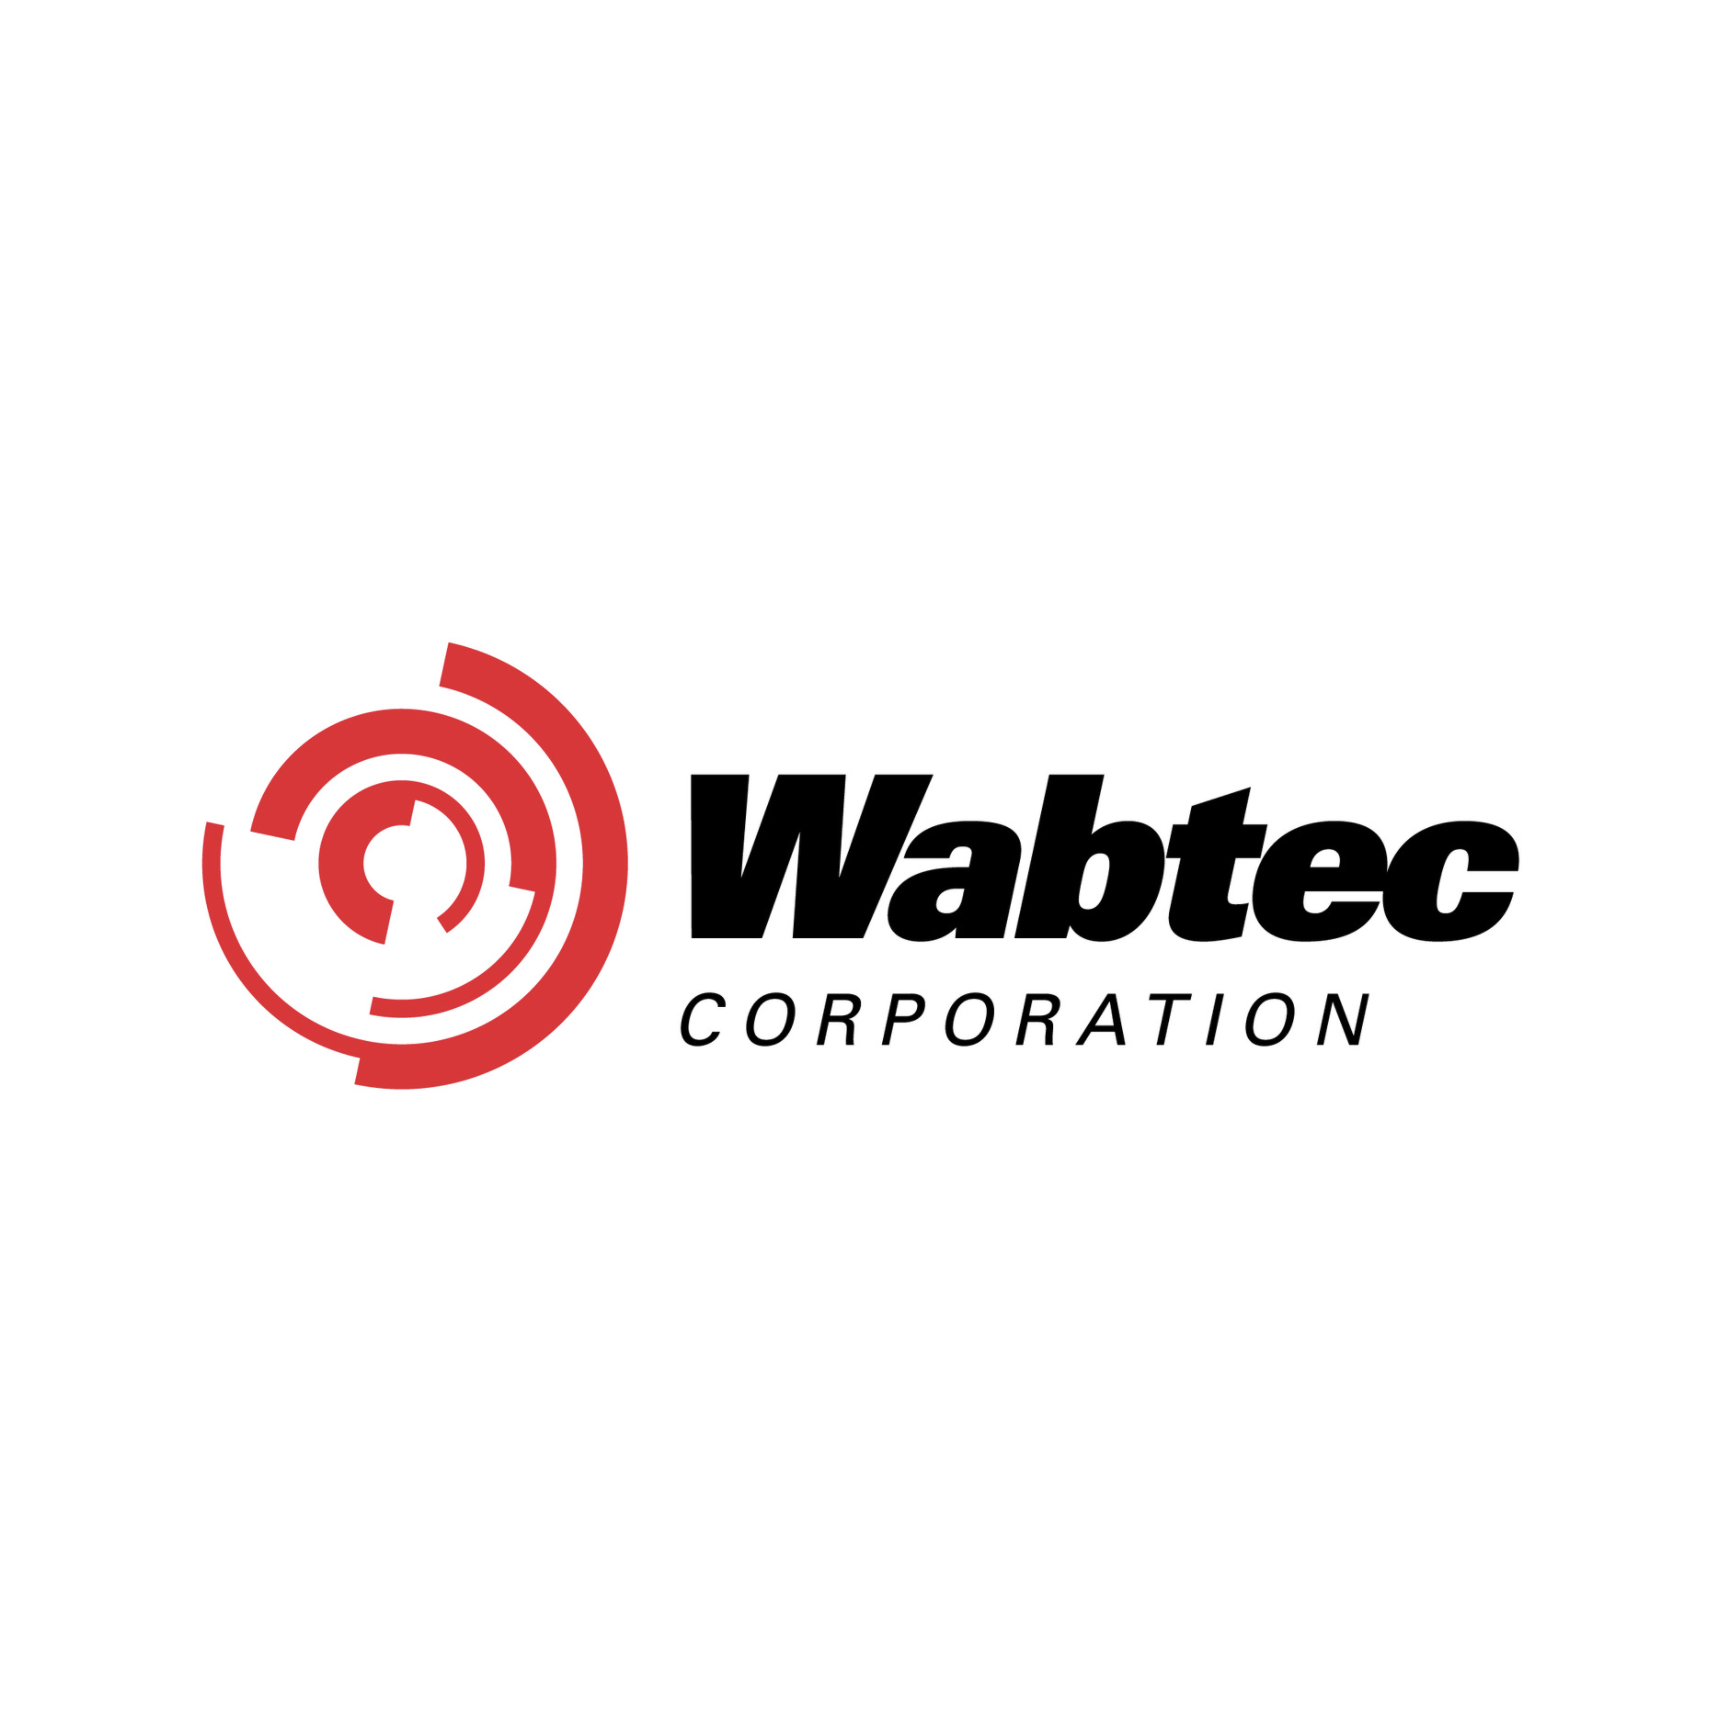 Wabtec Transit Business in Motion